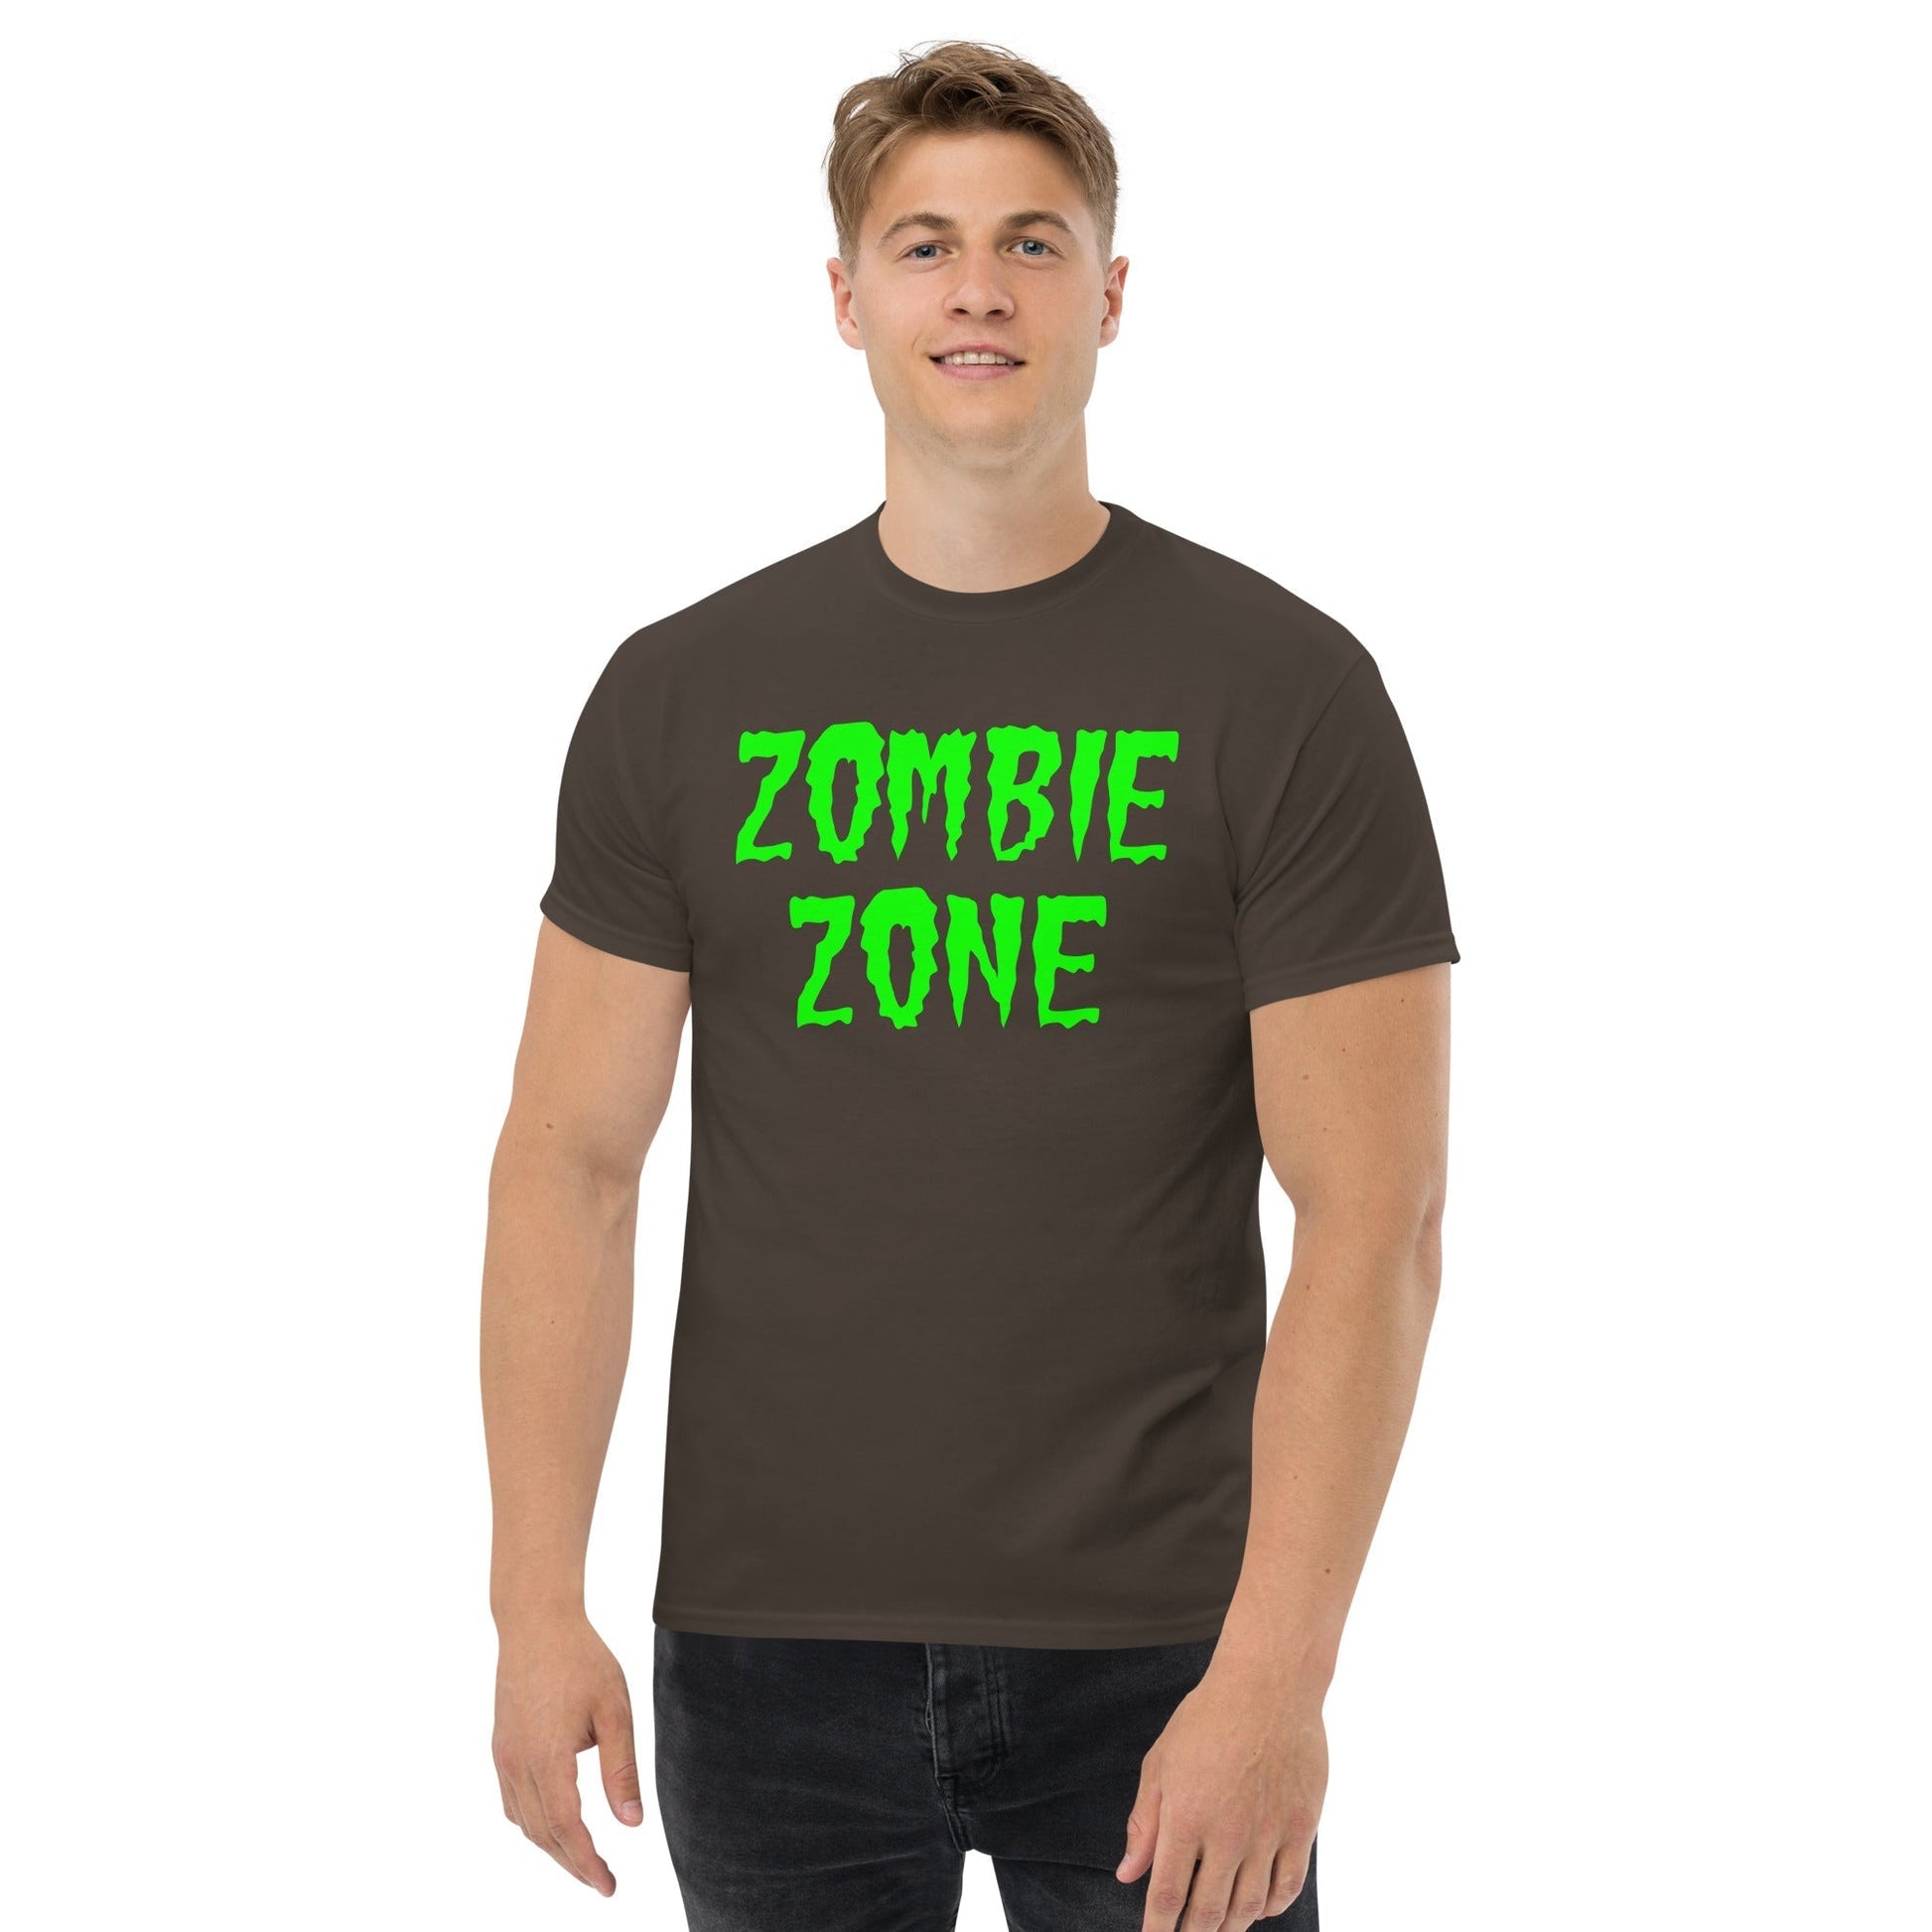 Zombie zone T-shirt